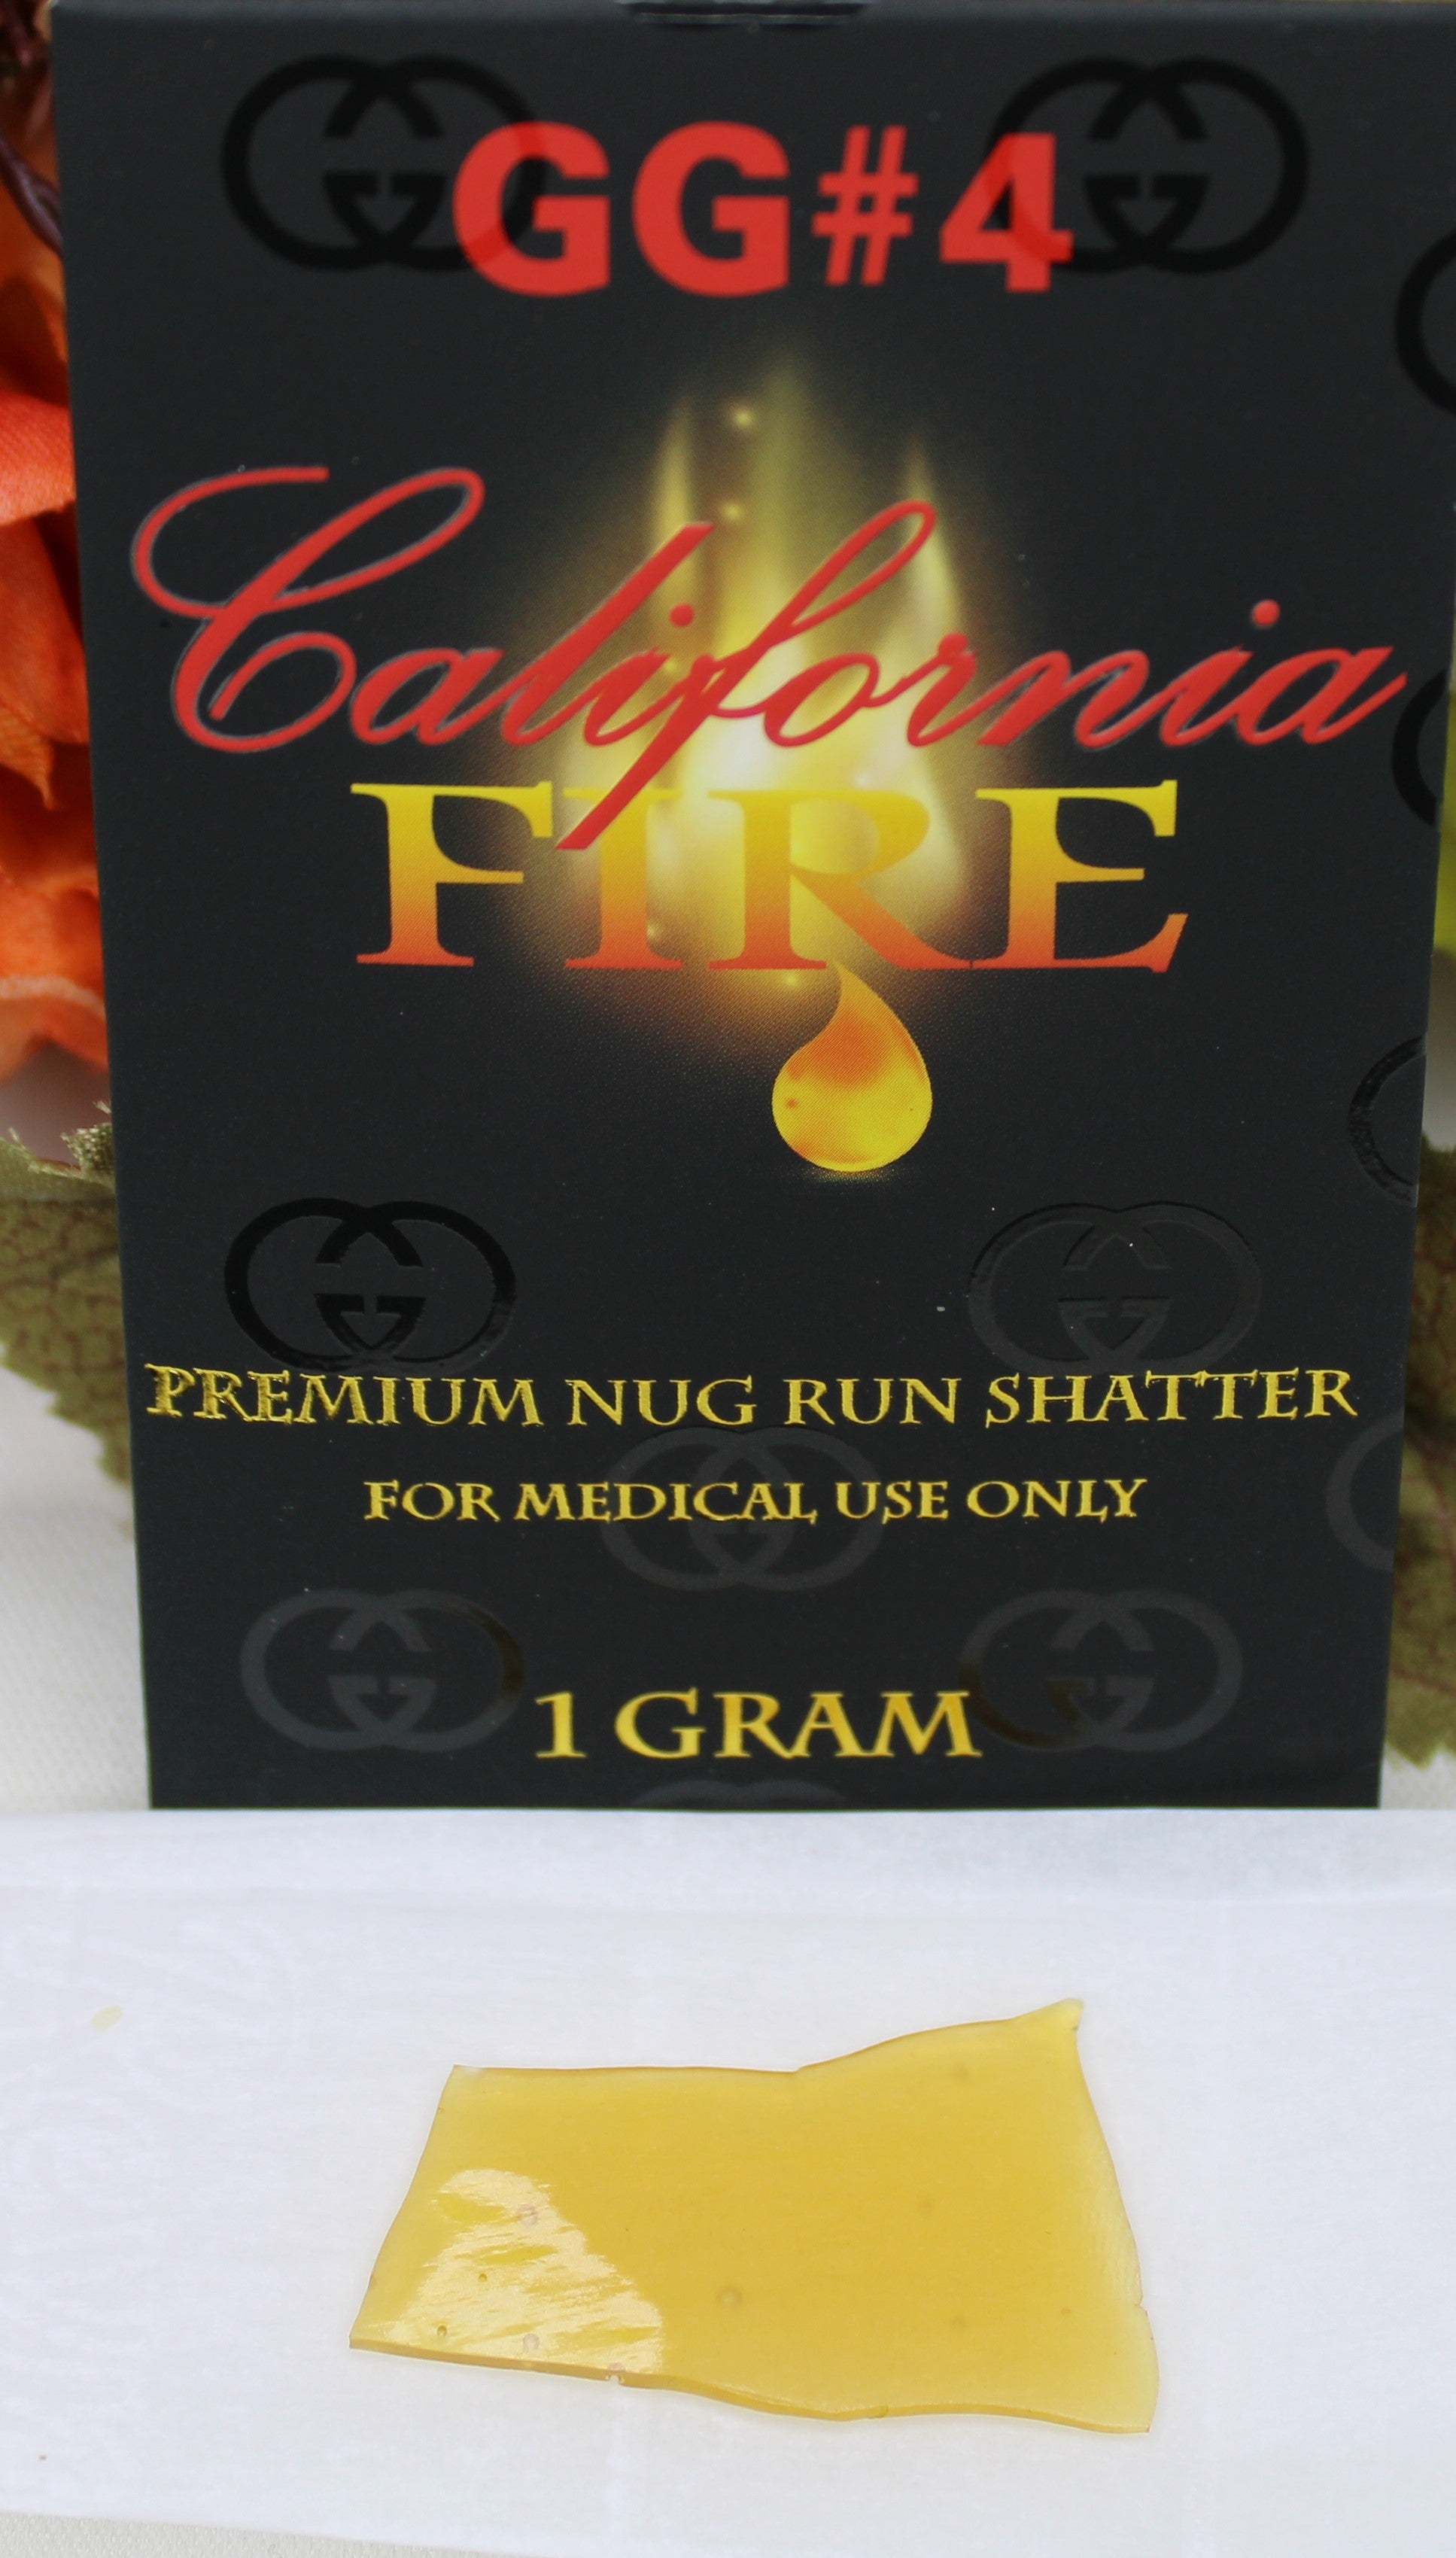 California Fire Premium Nug Run Shatter "GG #4" (1g)